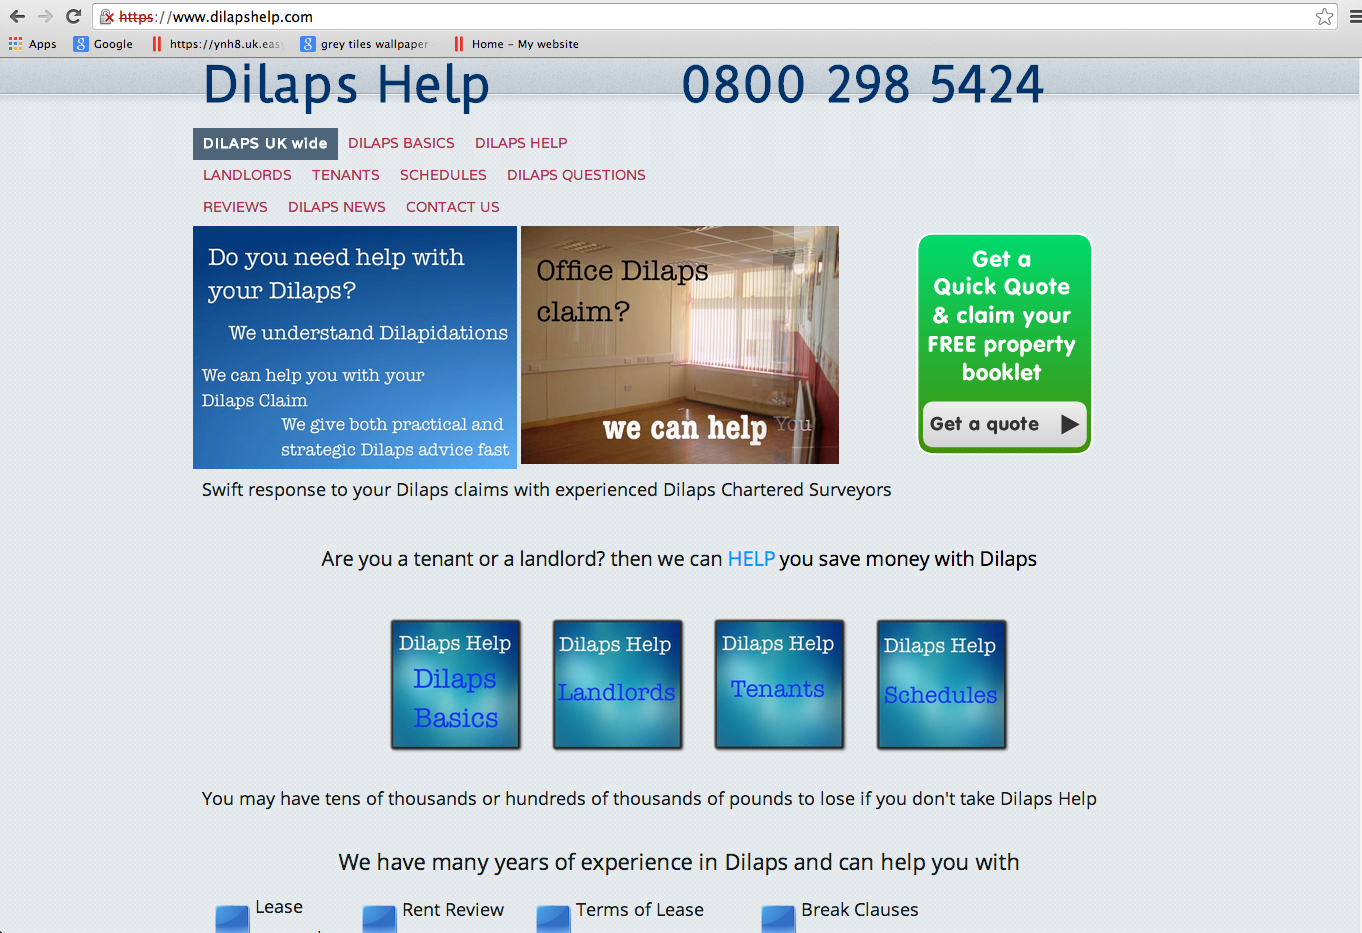  Take a look at DilapsHelp.com